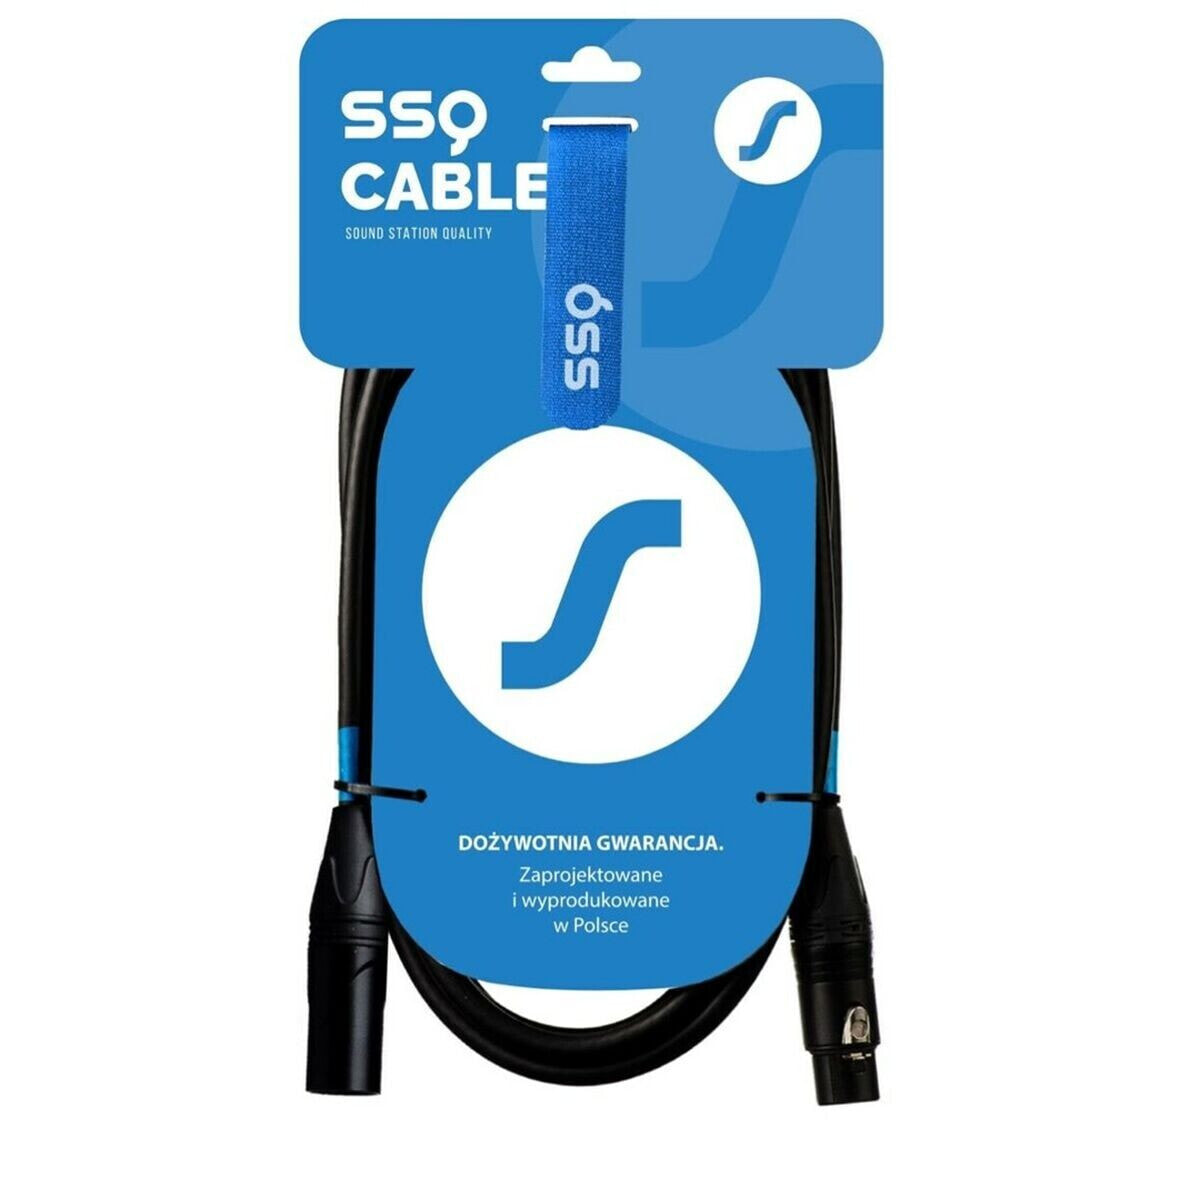 XLR cable Sound station quality (SSQ) SS-1837 0,5 m